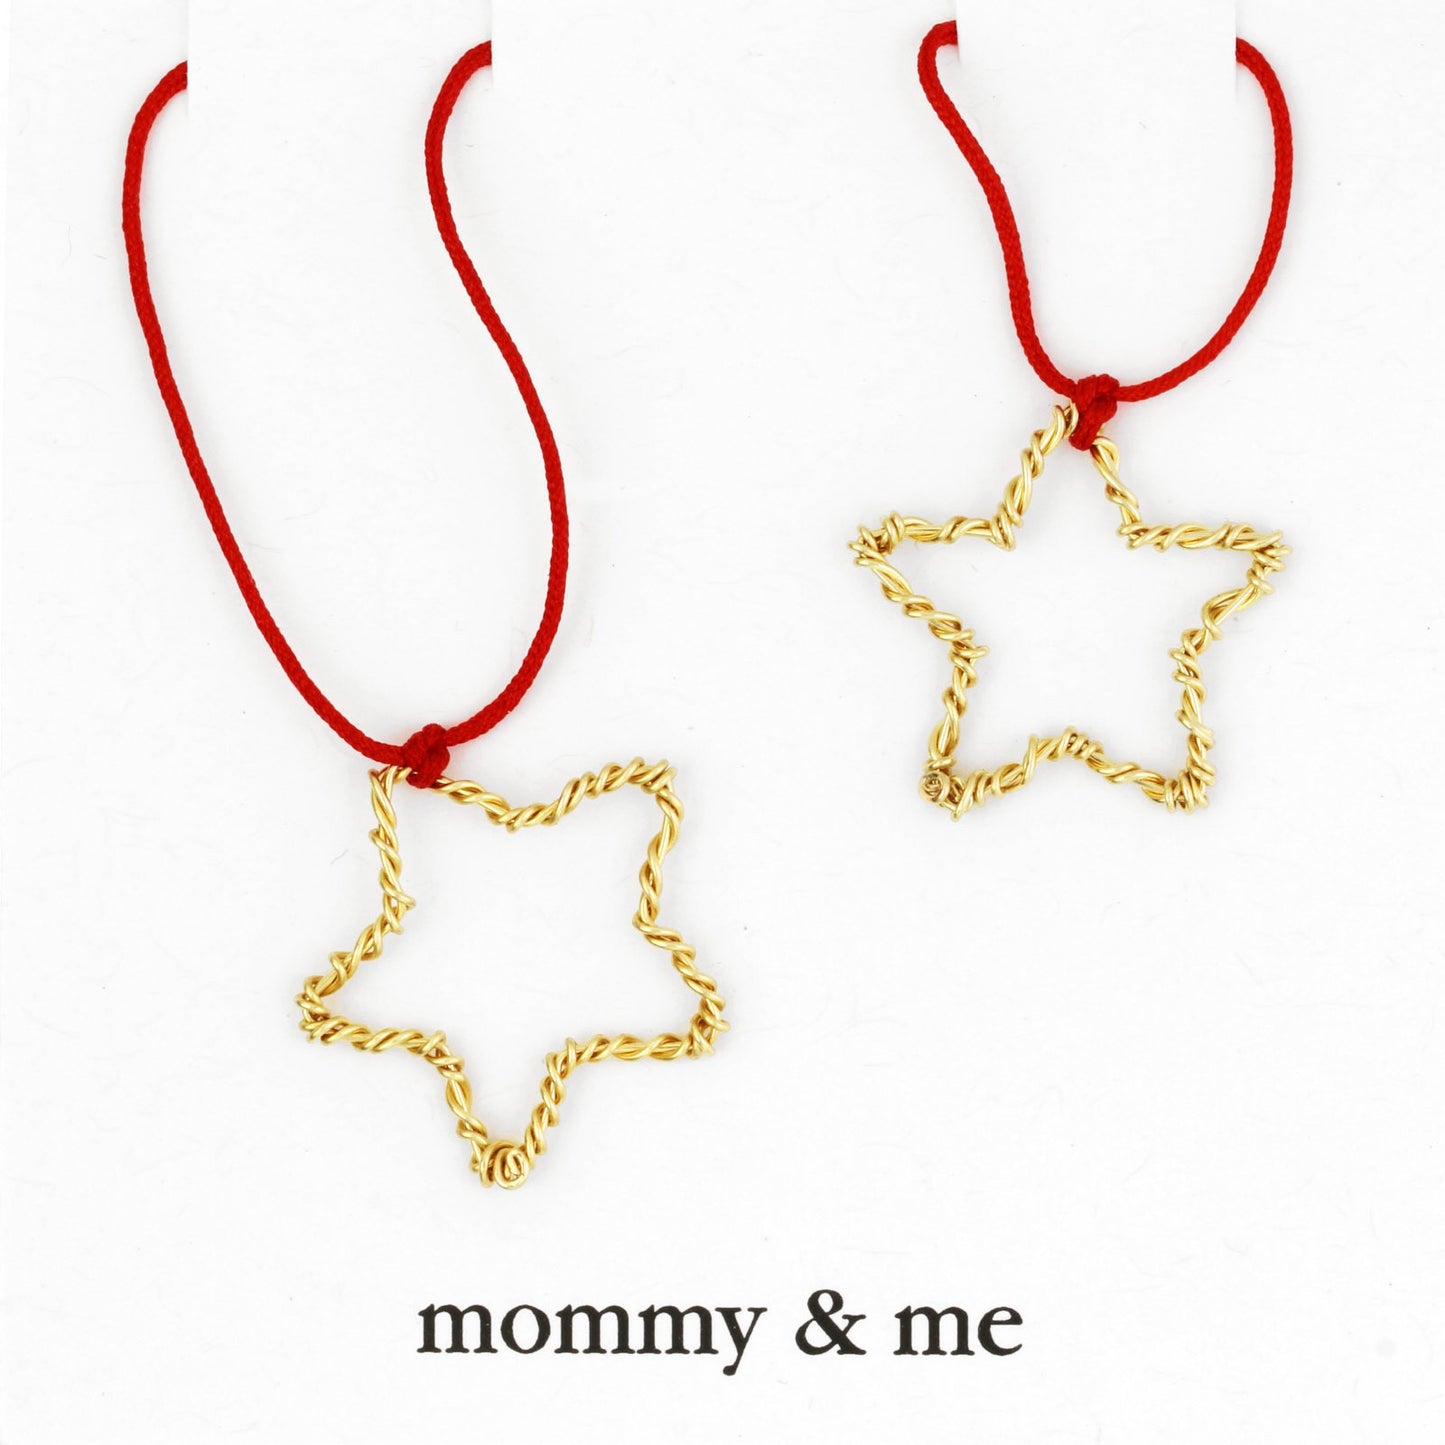 Mommy & Me Necklace Set